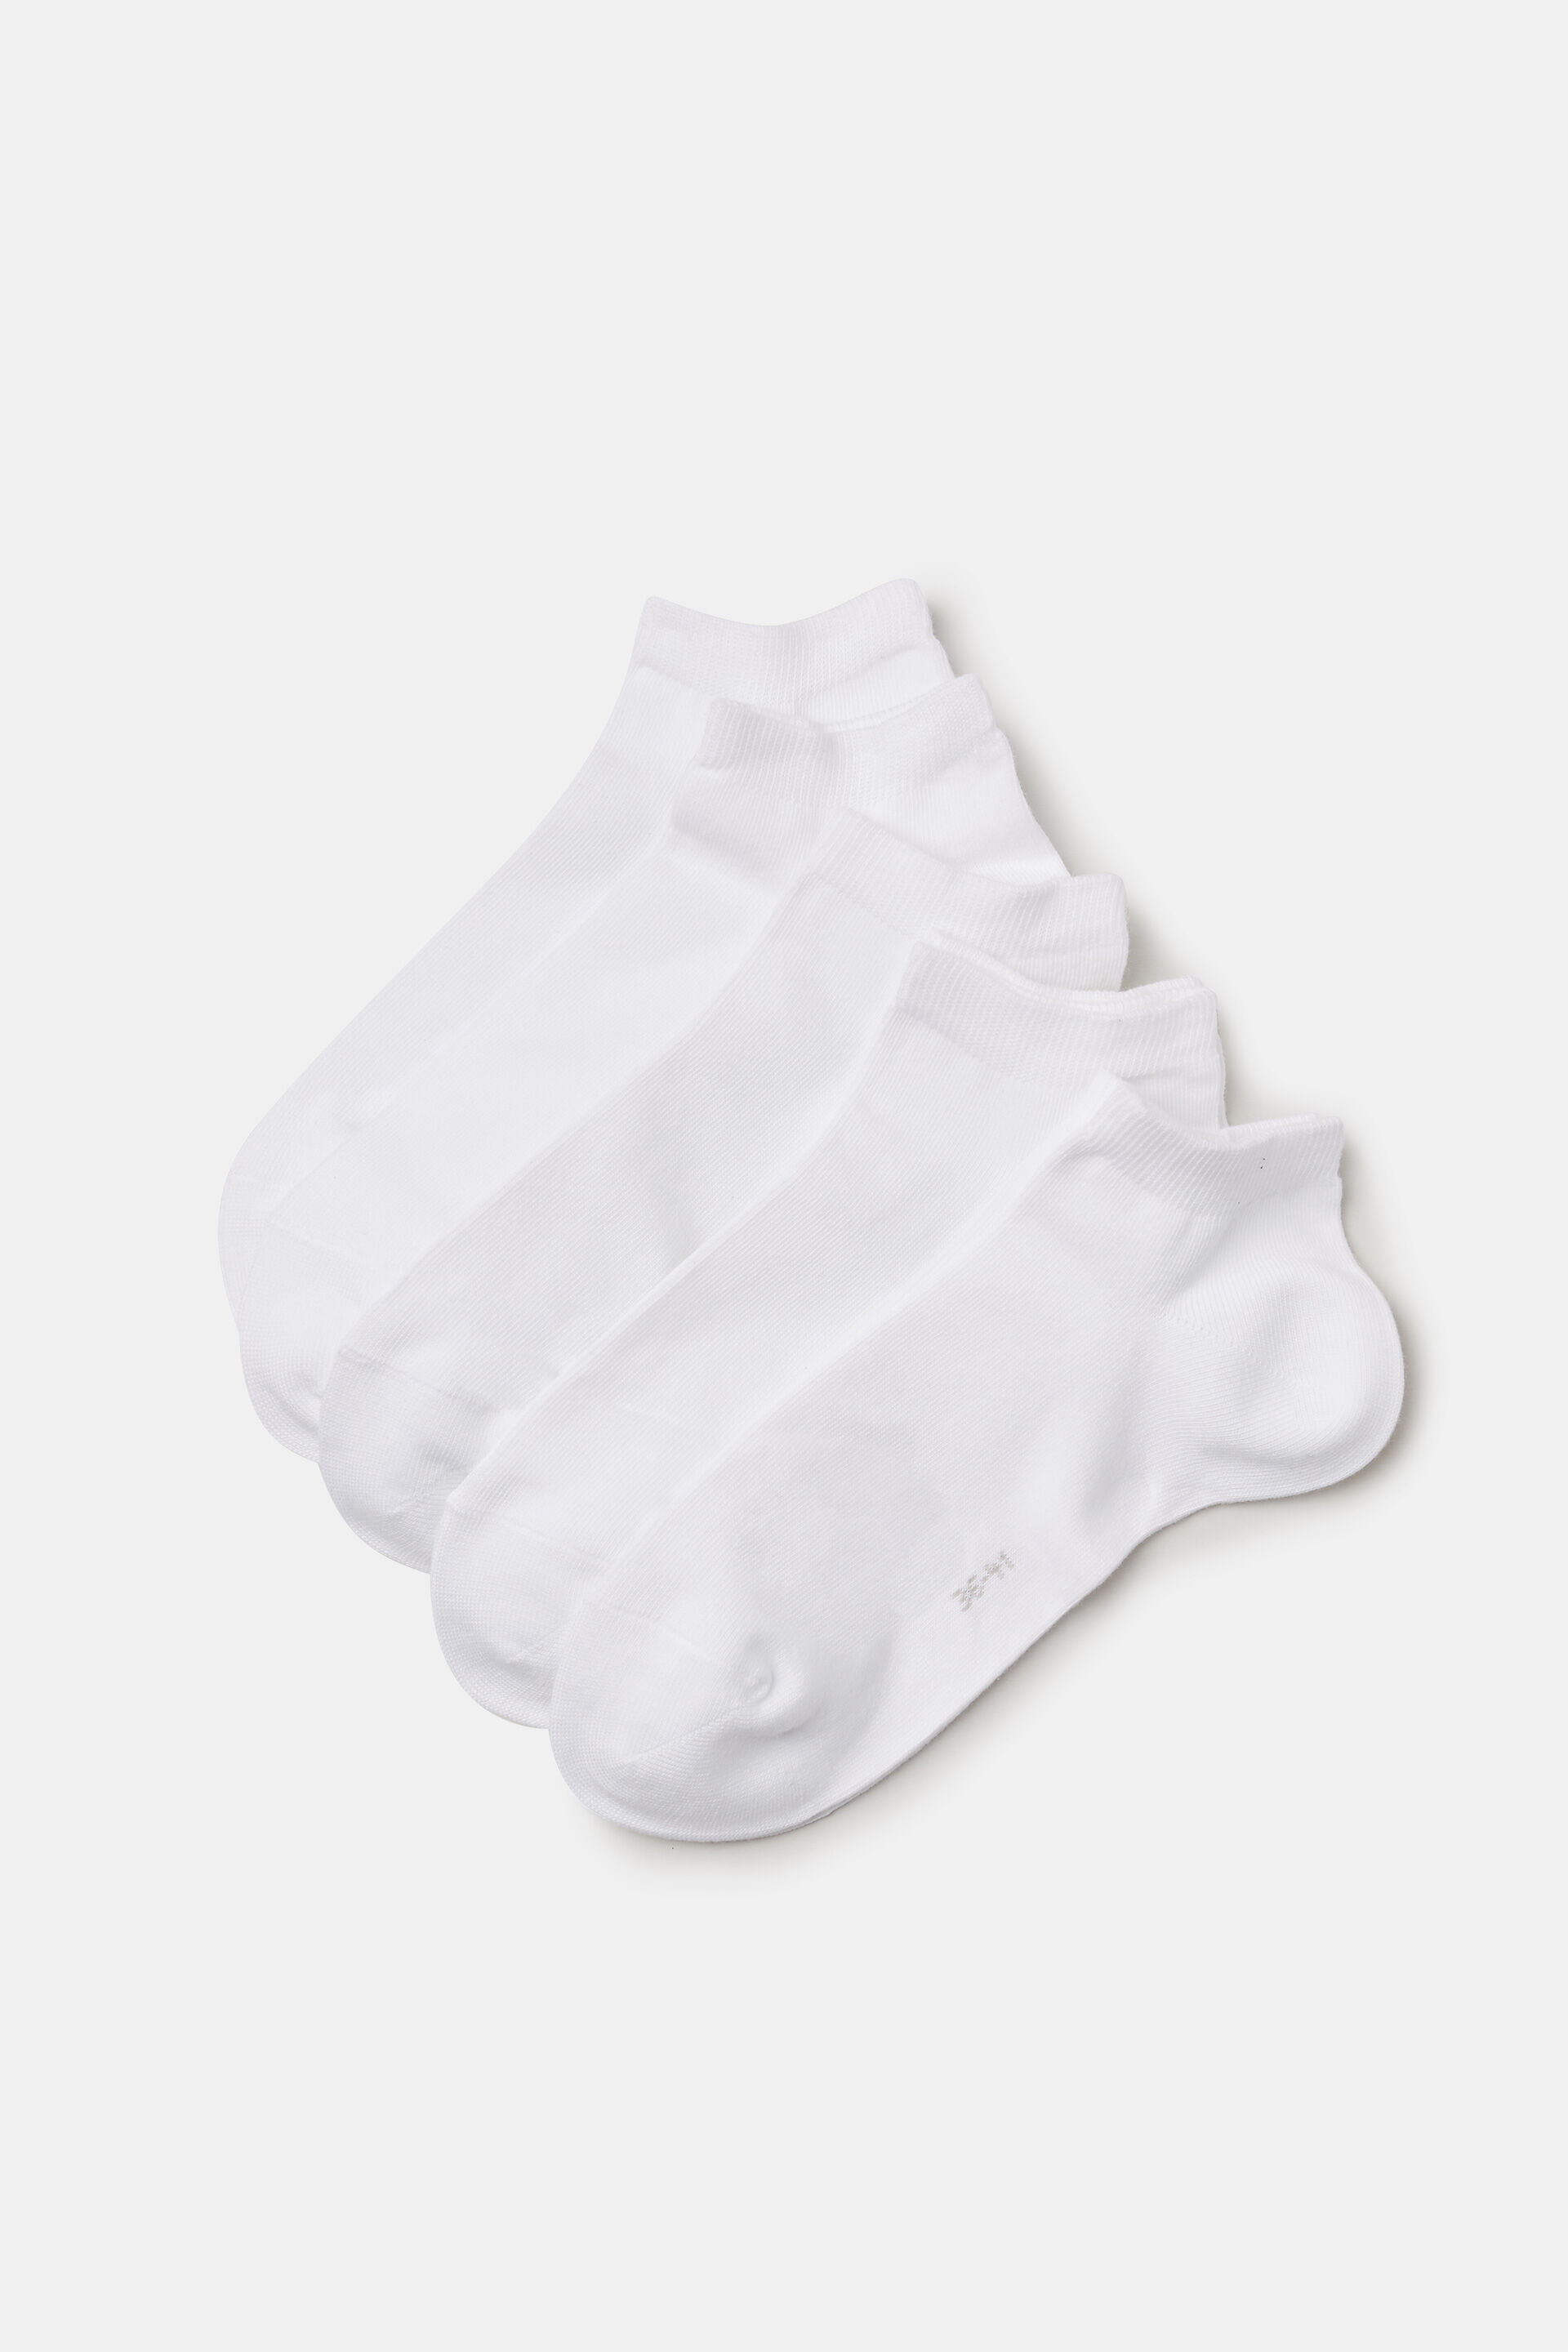 Esprit of 5-pair socks cotton pack blended